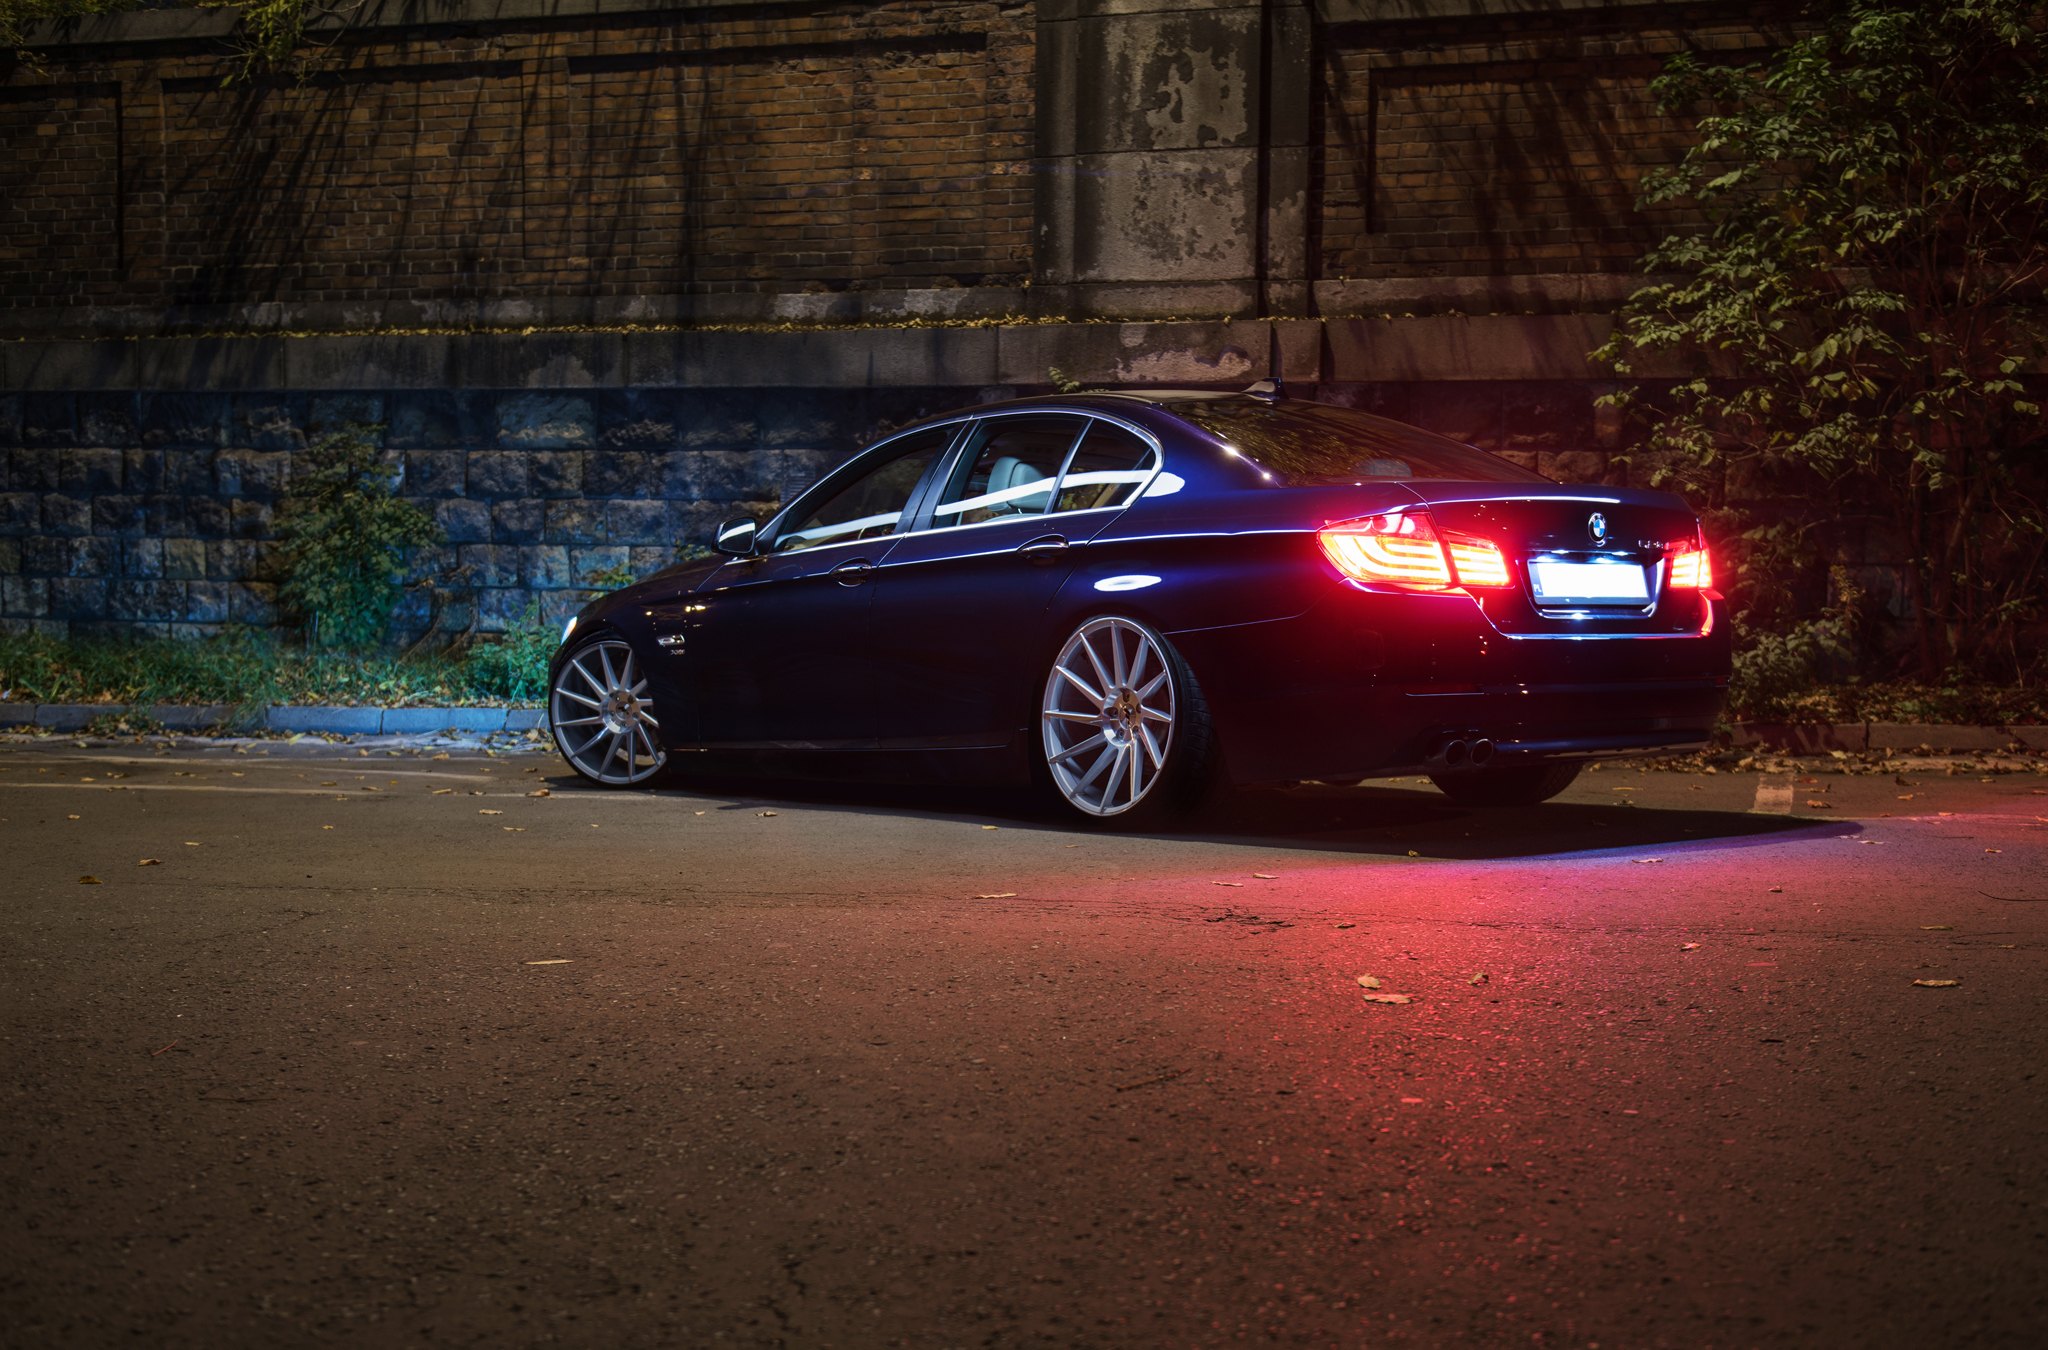 Aftermarket Rear Diffuser on Dark Blue BMW 5-Series - Photo by JR Wheels